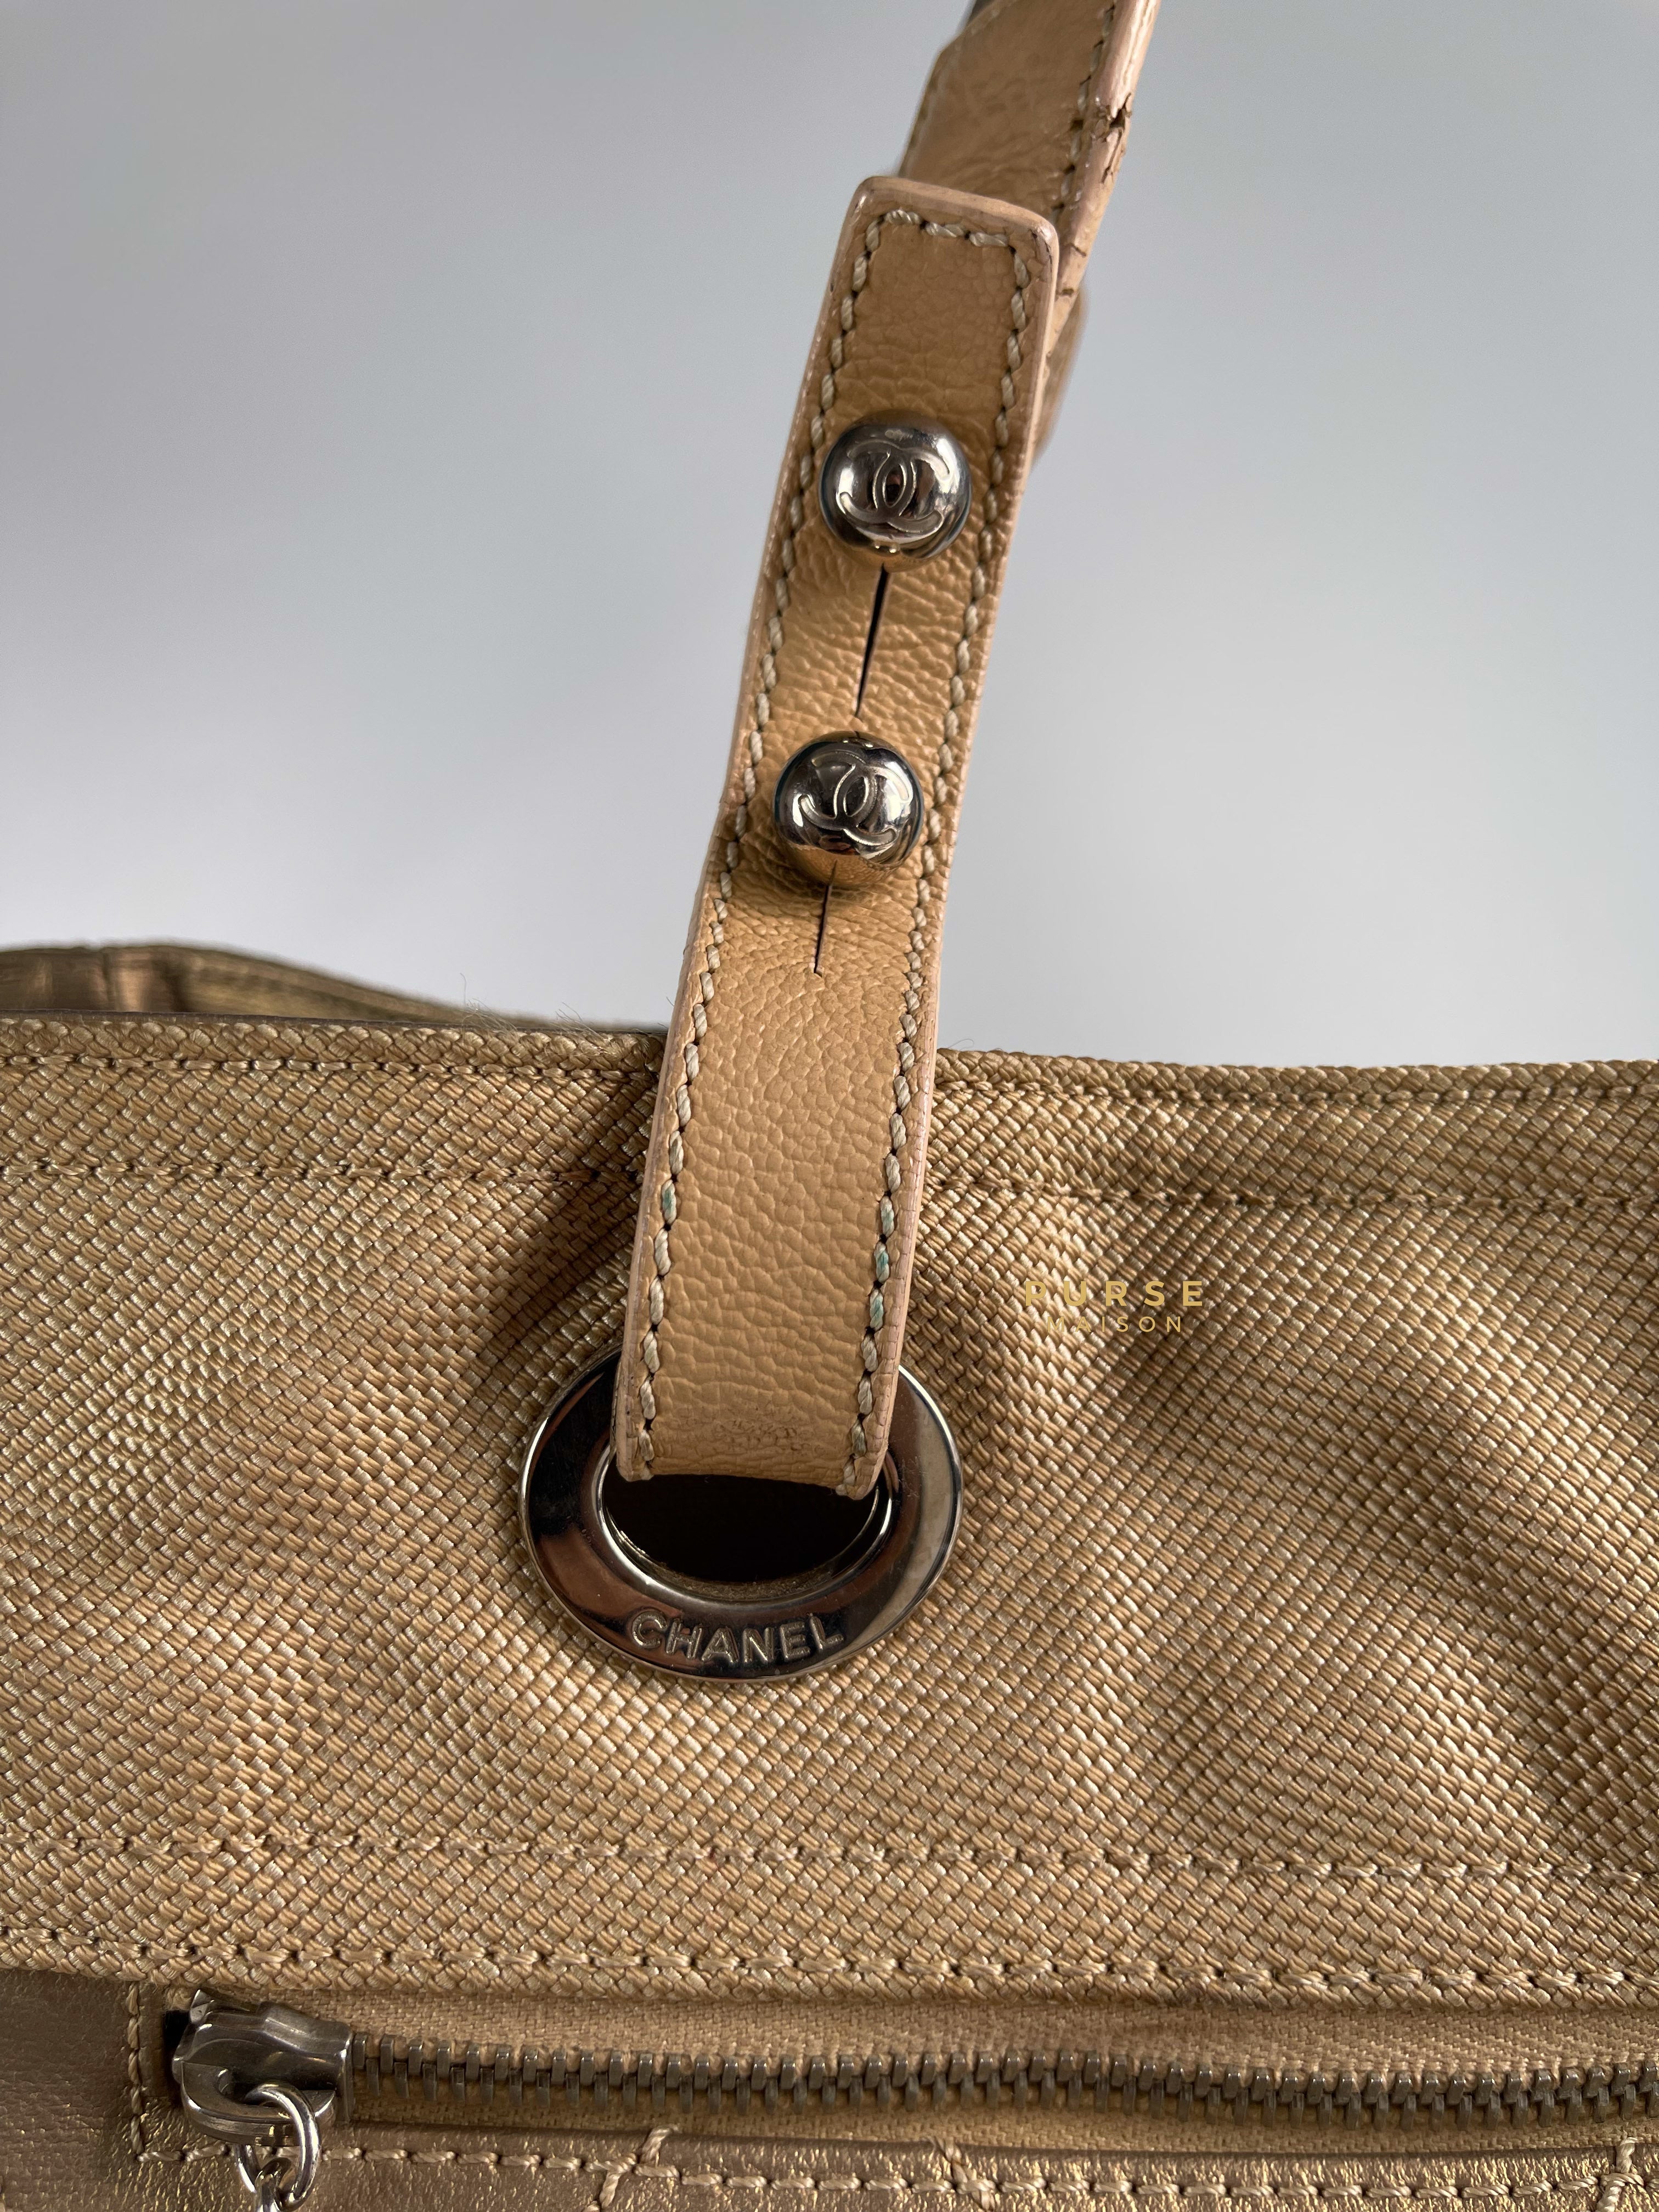 Chanel Biarritz Large Tote Bag (Series 11) | Purse Maison Luxury Bags Shop